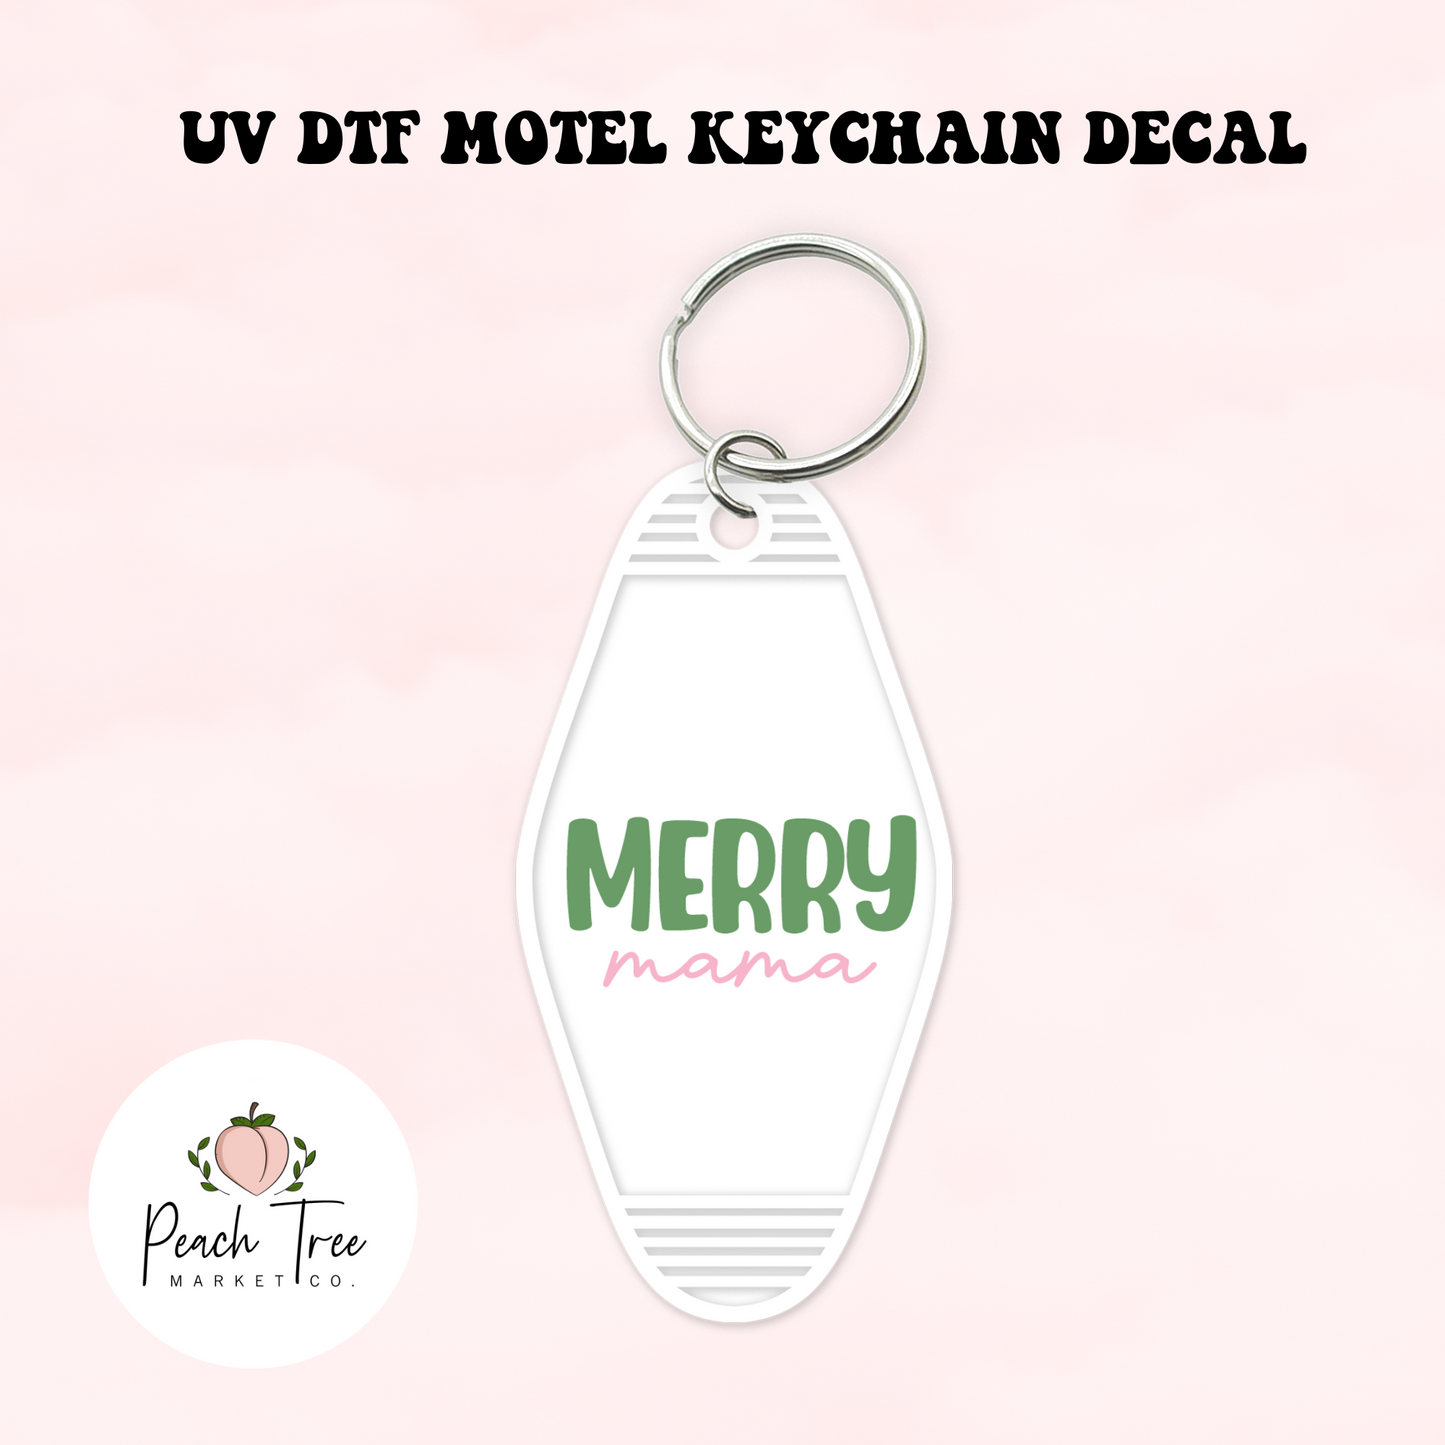 Merry Mama UV DTF Motel Keychain Decal